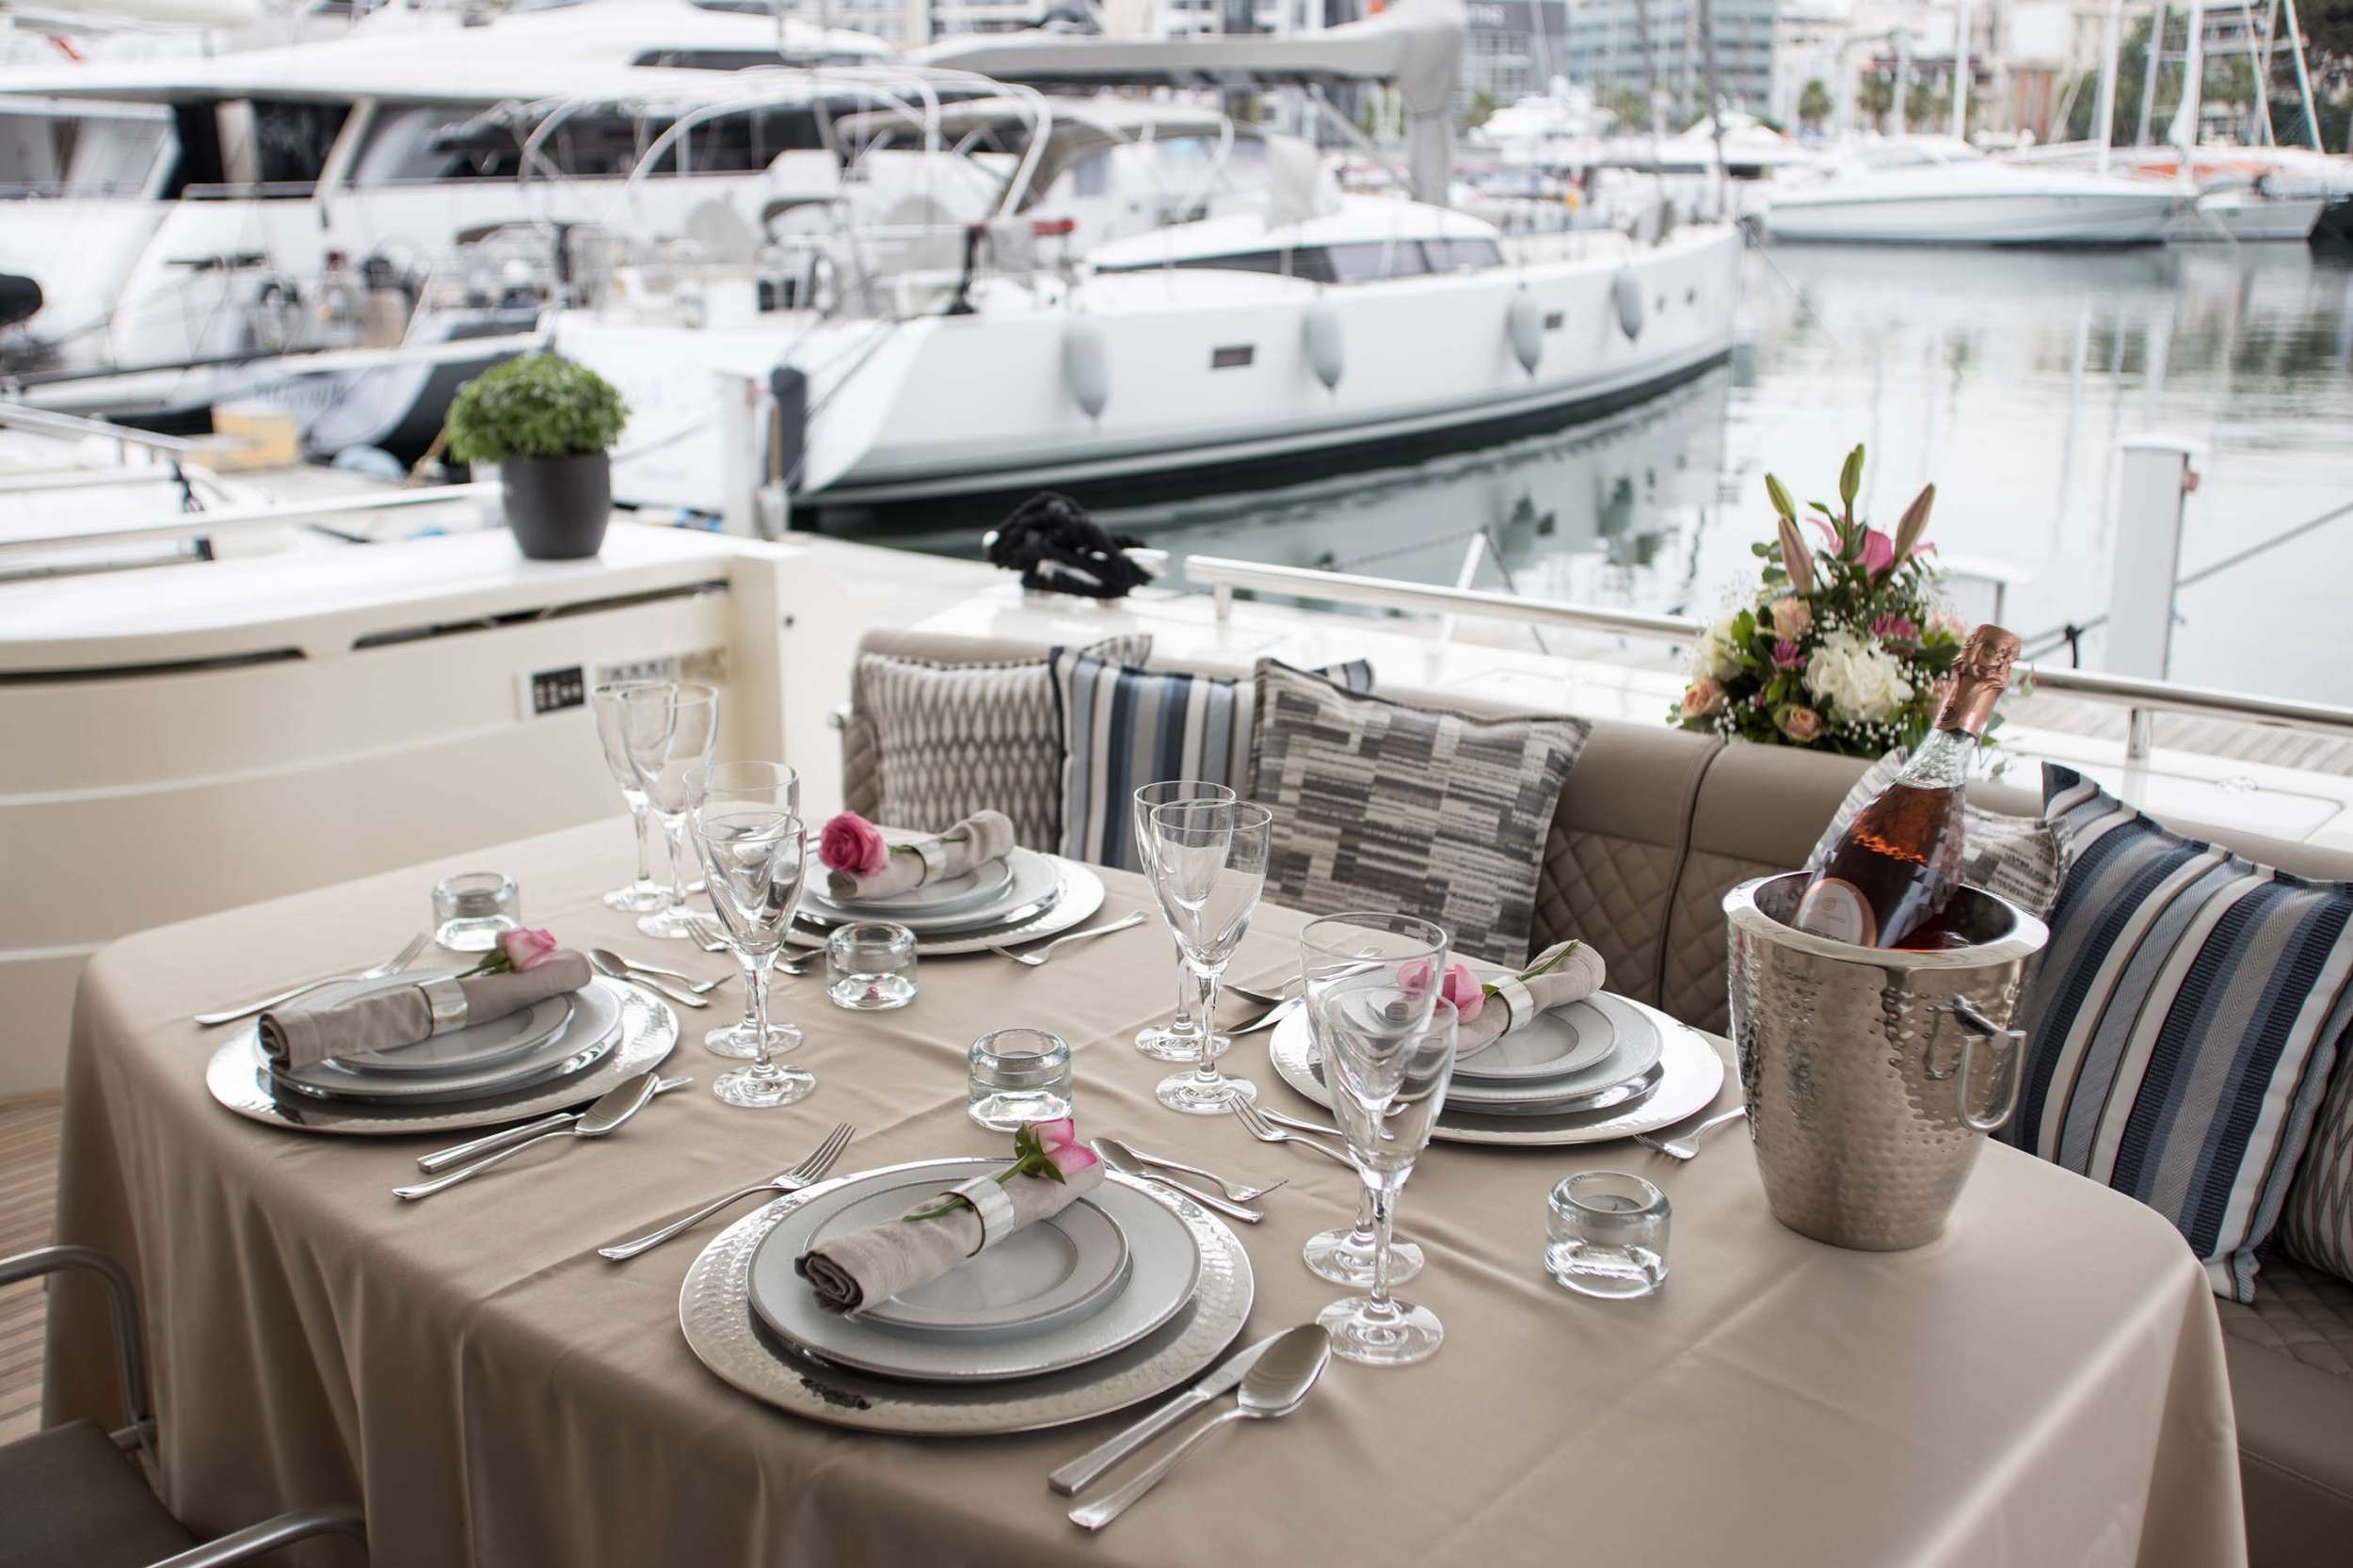 SOFIA D Yacht Charter - Dining Area exterior